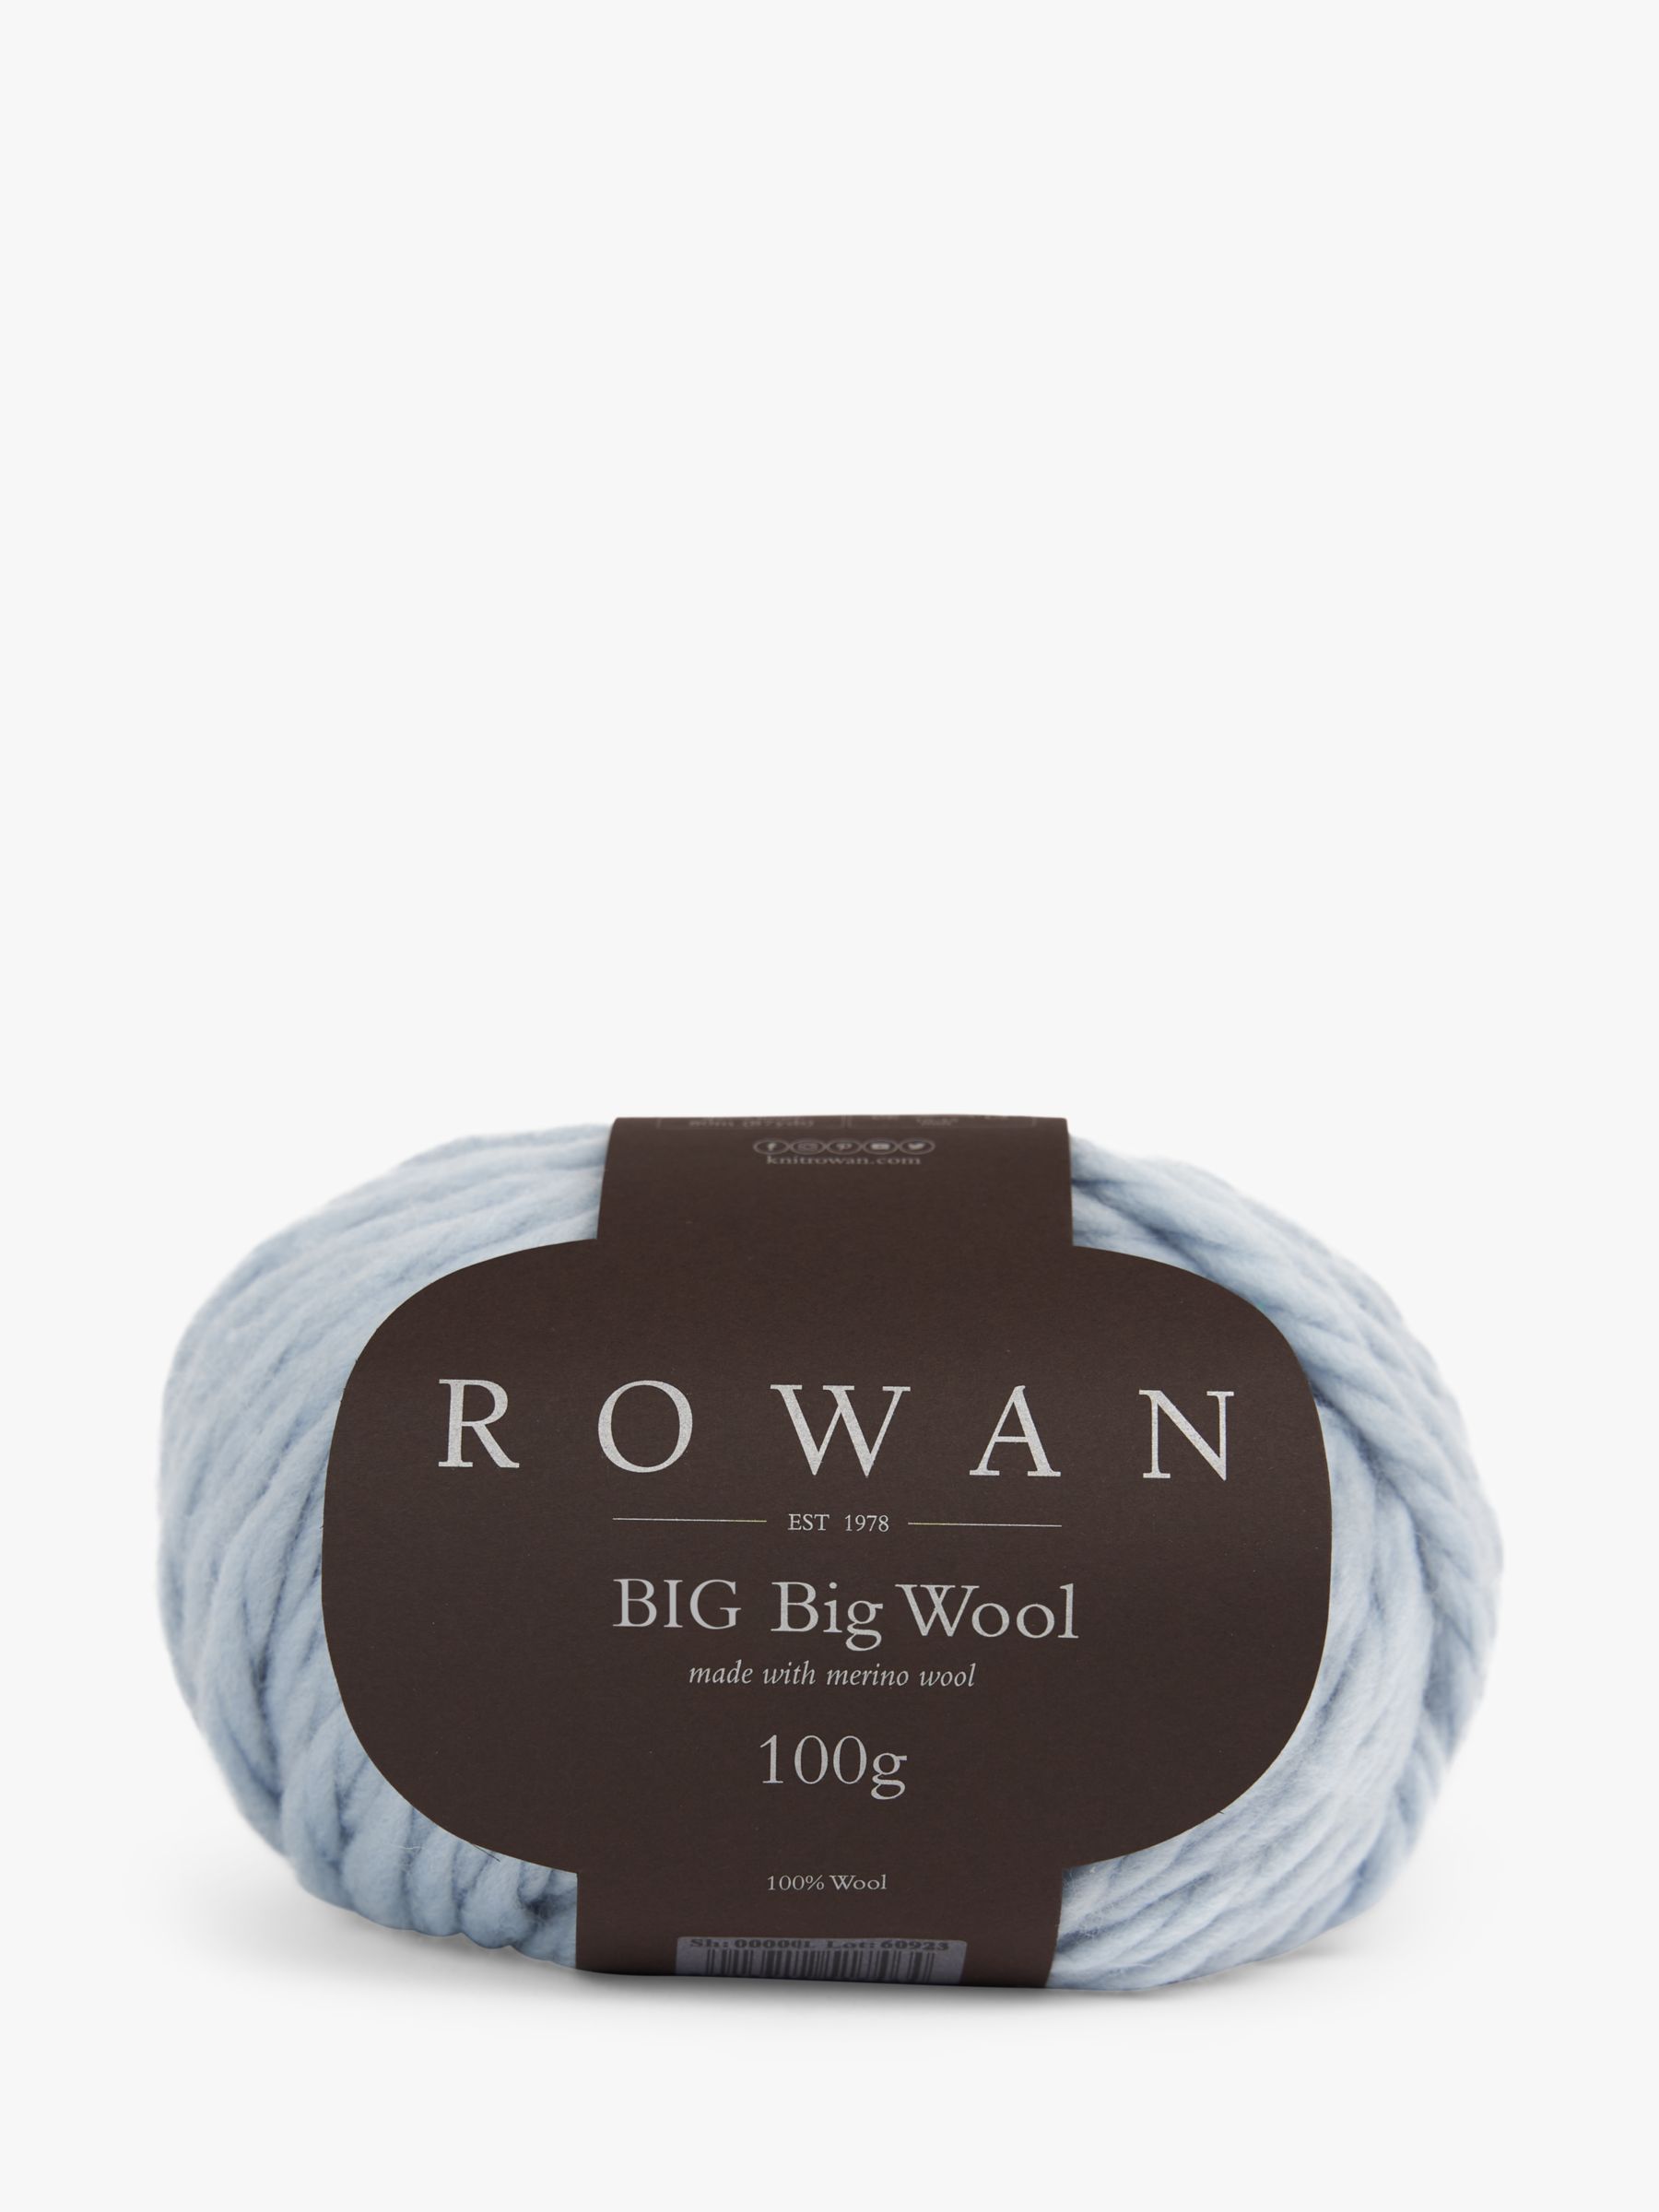 Rowan Big Big Wool Yarn, 100g